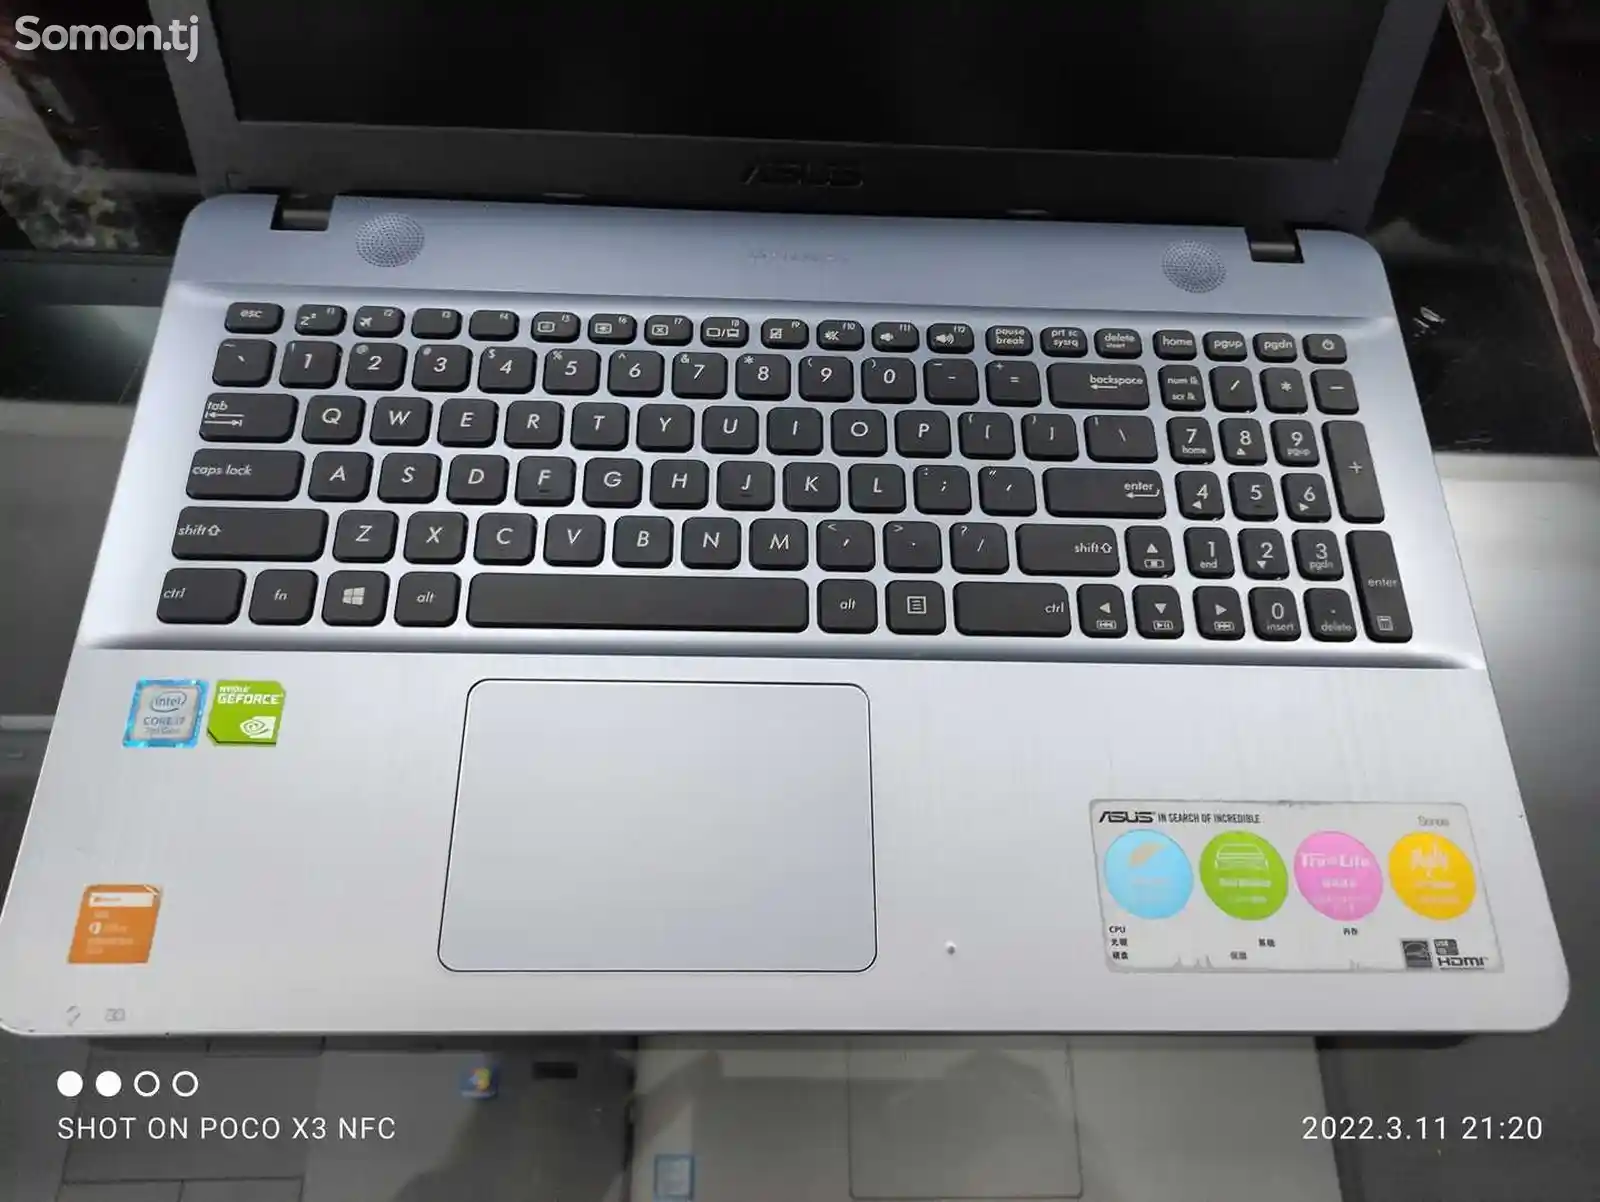 Игровой ноутбук Asus X541UJ Core i7-7500U 2.9GHz 8gb/256gb SSD 7TH GEN-4